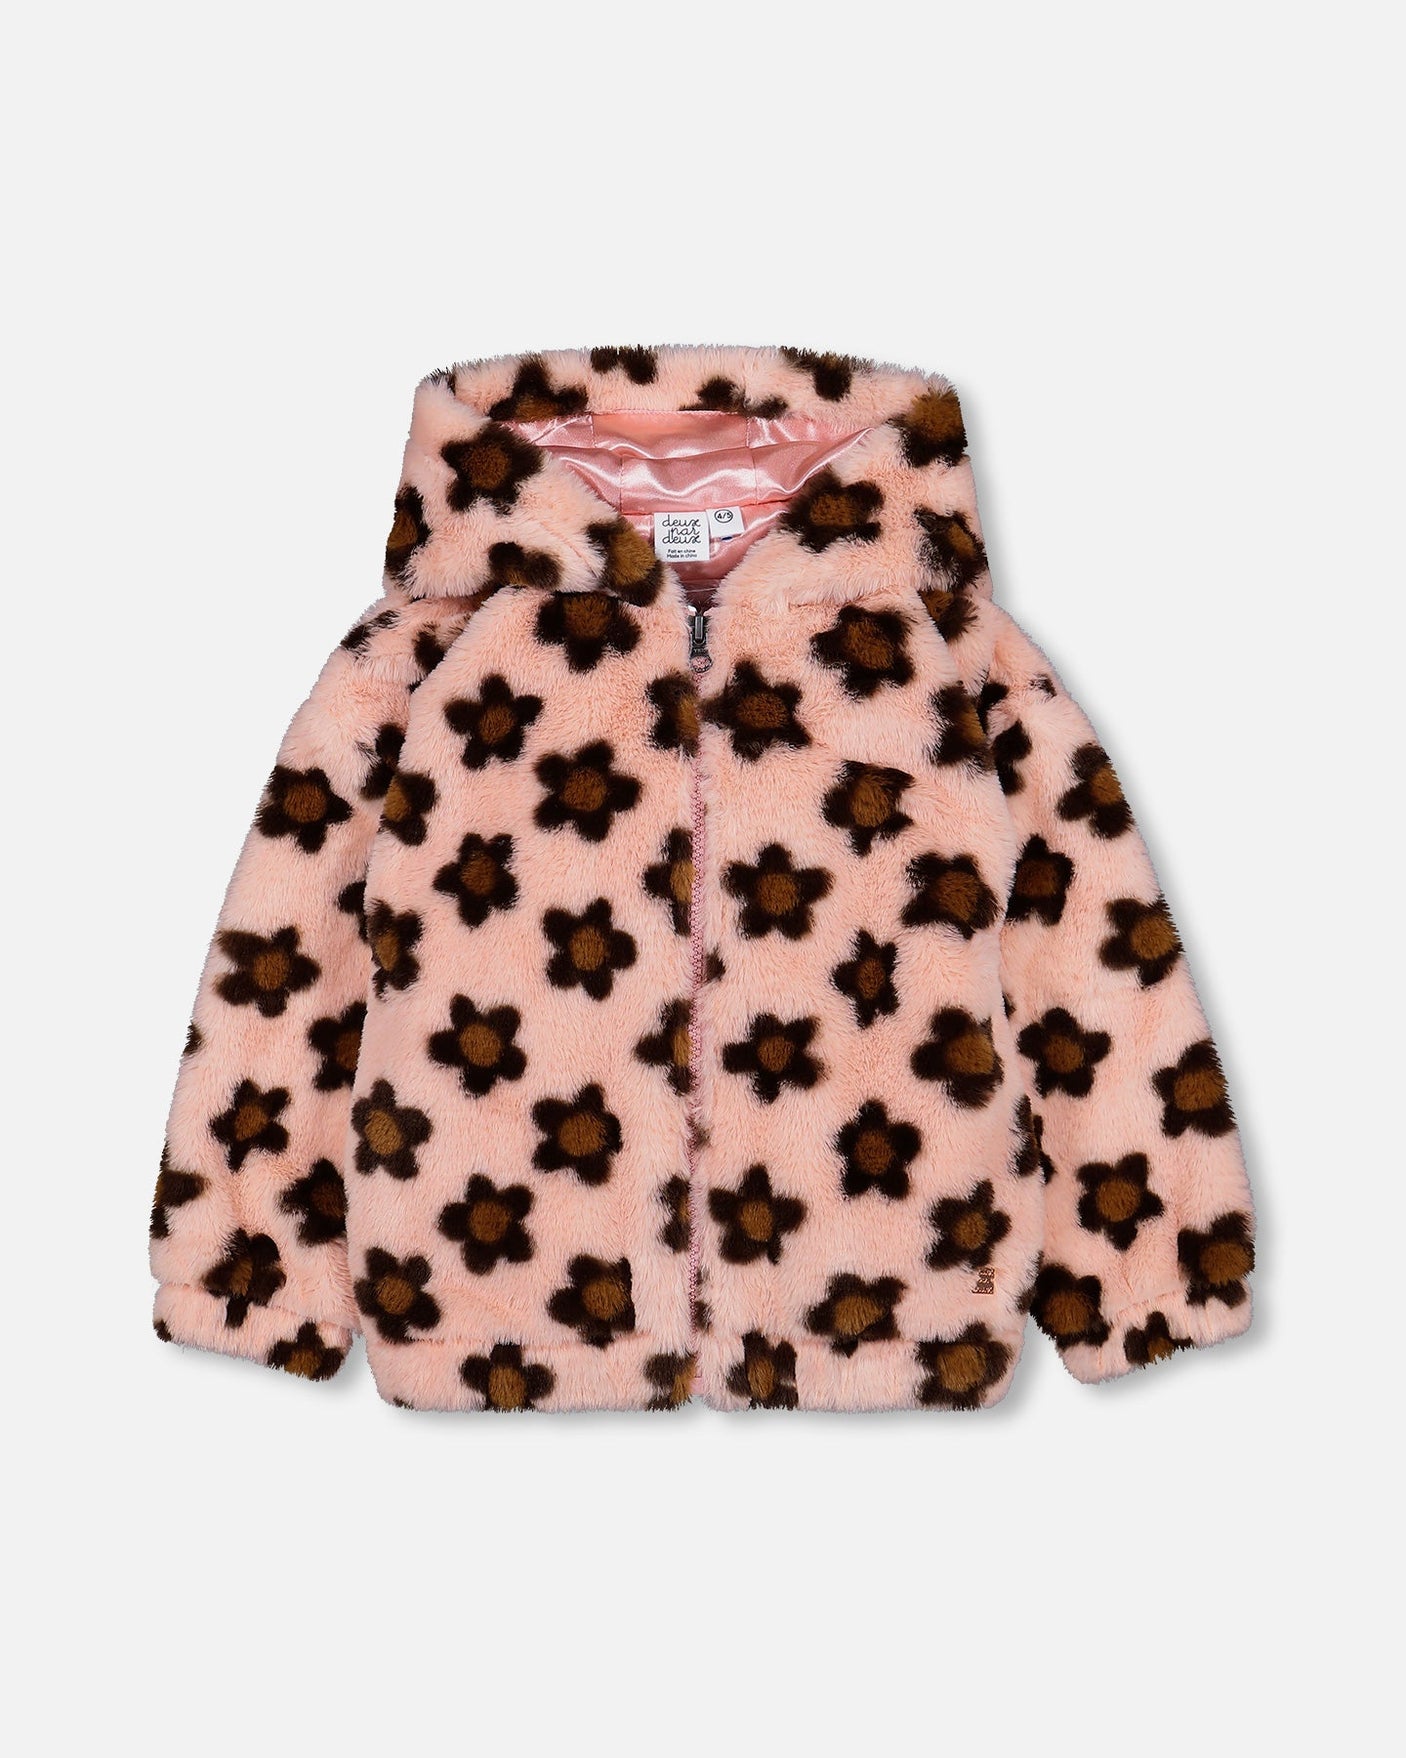 Faux Fur Hooded Jacket Pink Printed With Brown Flowers-0